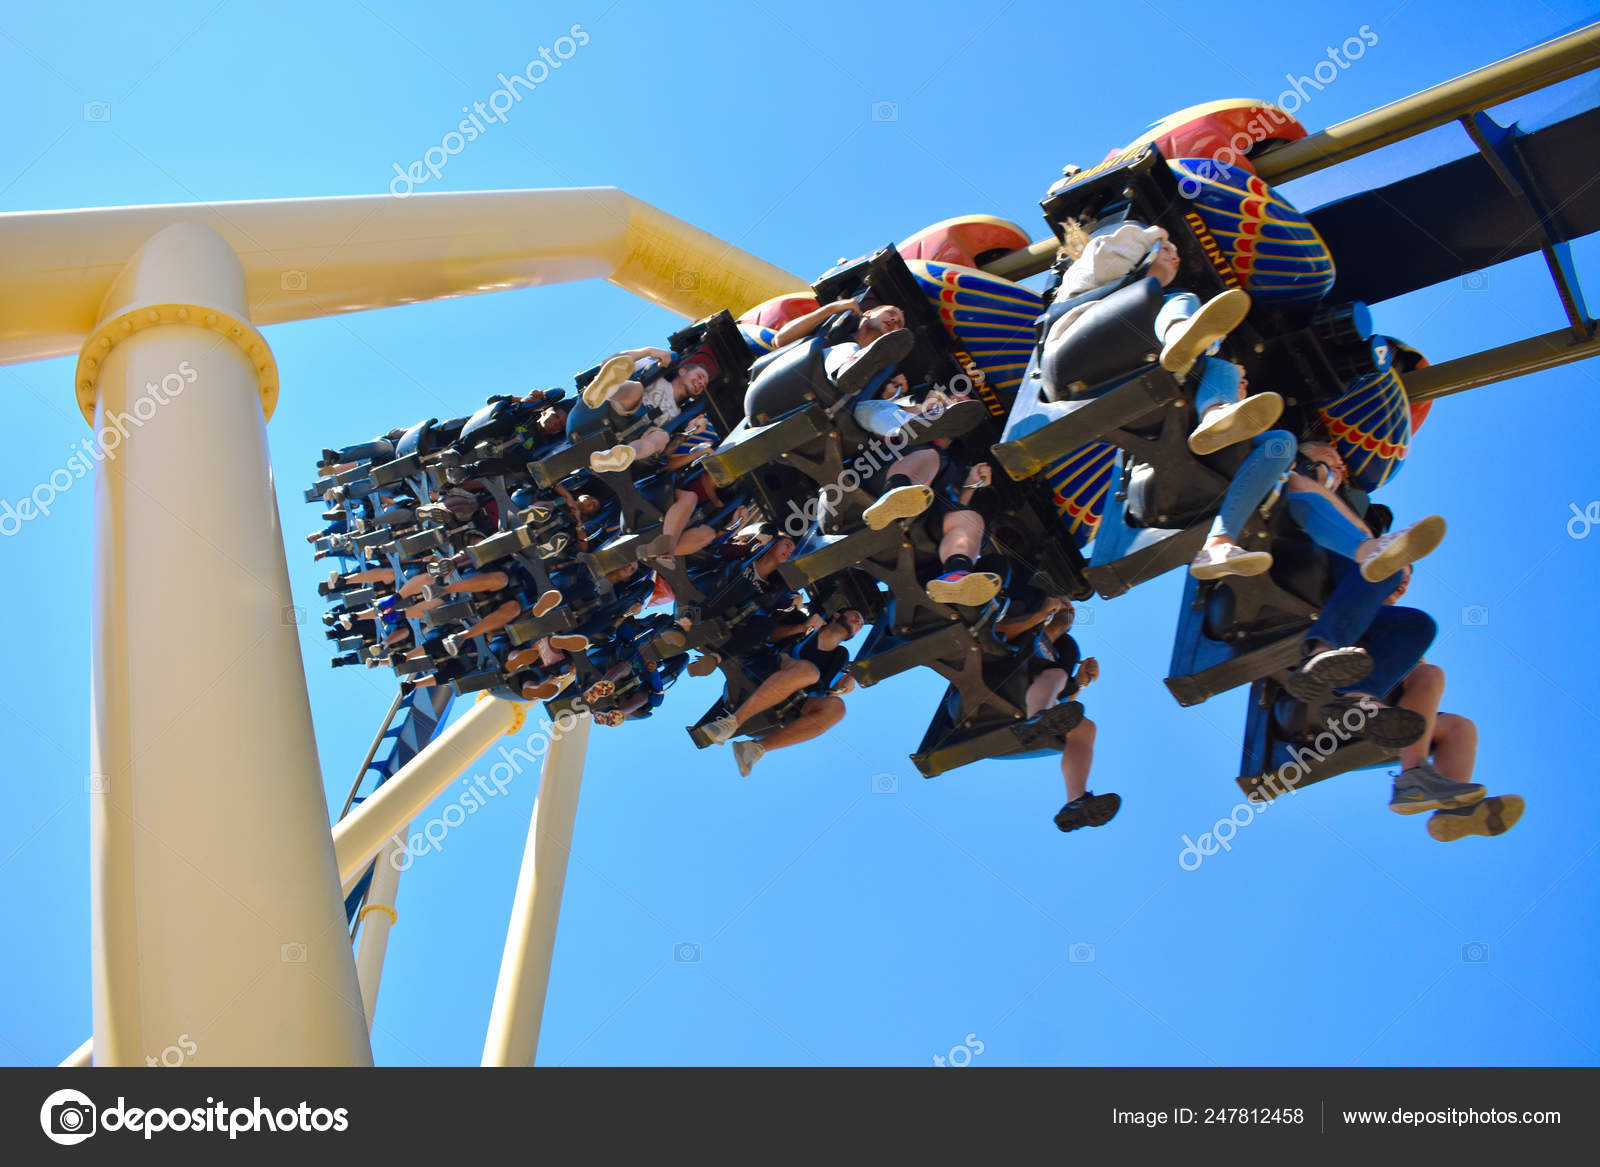 Tampa Florida October 2018 Thrillseekers Ride Montu Rollercoaster